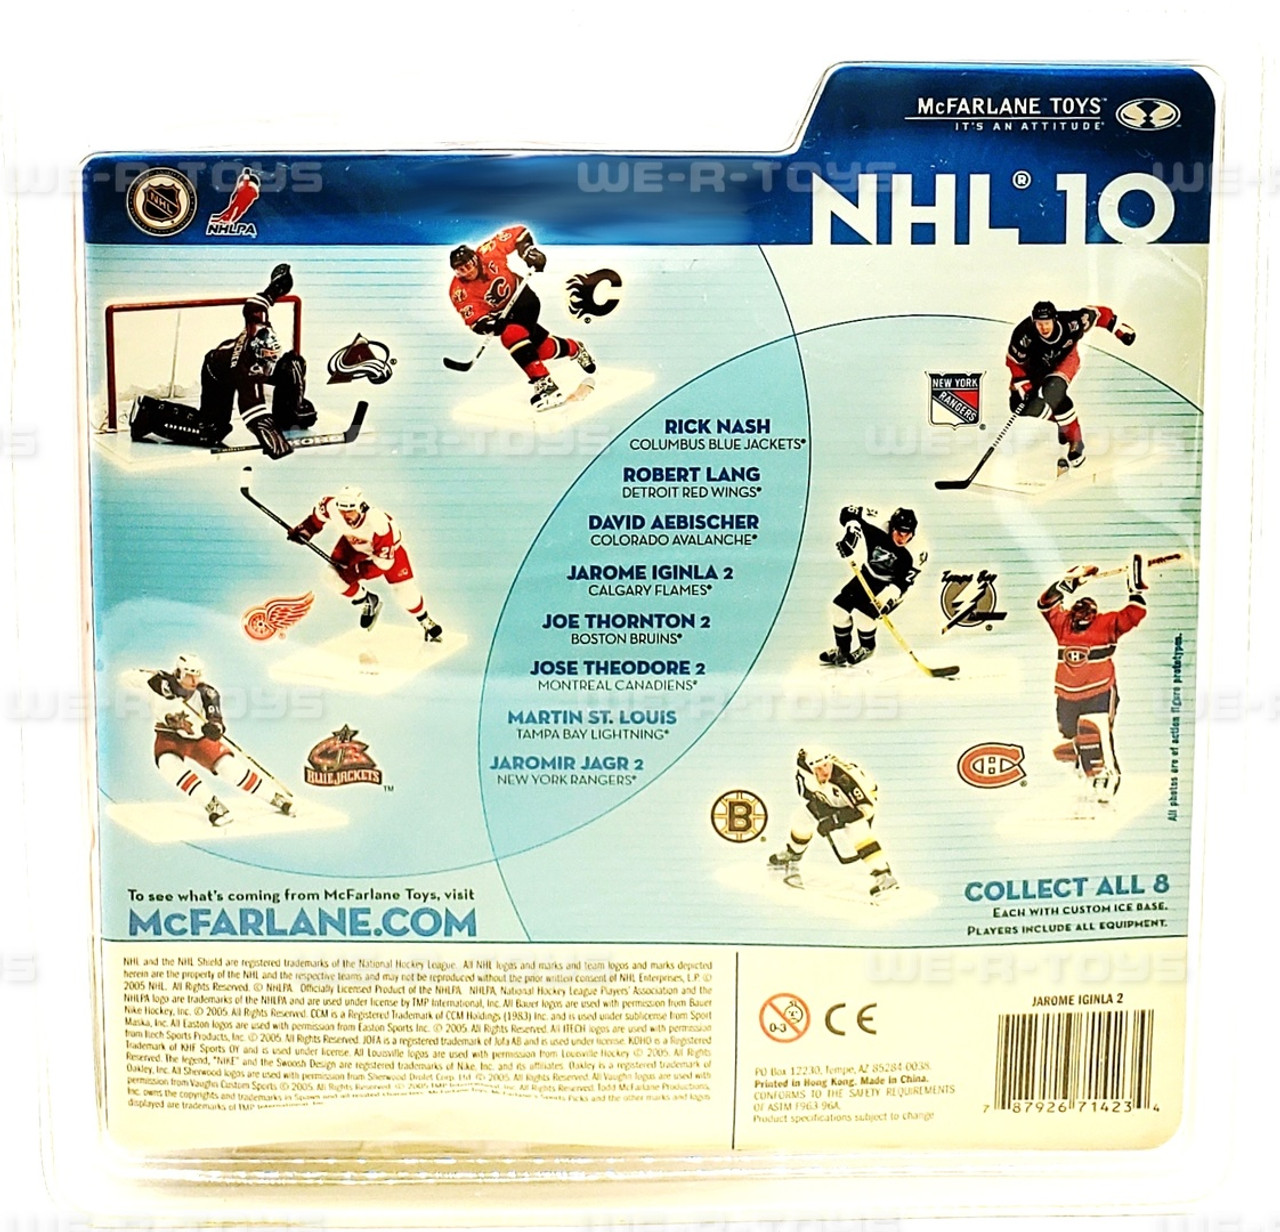 McFarlane Toys NHL Calgary Flames Sports Picks Hockey Series 4 Jarome Iginla  Action Figure Black Jersey Variant - ToyWiz